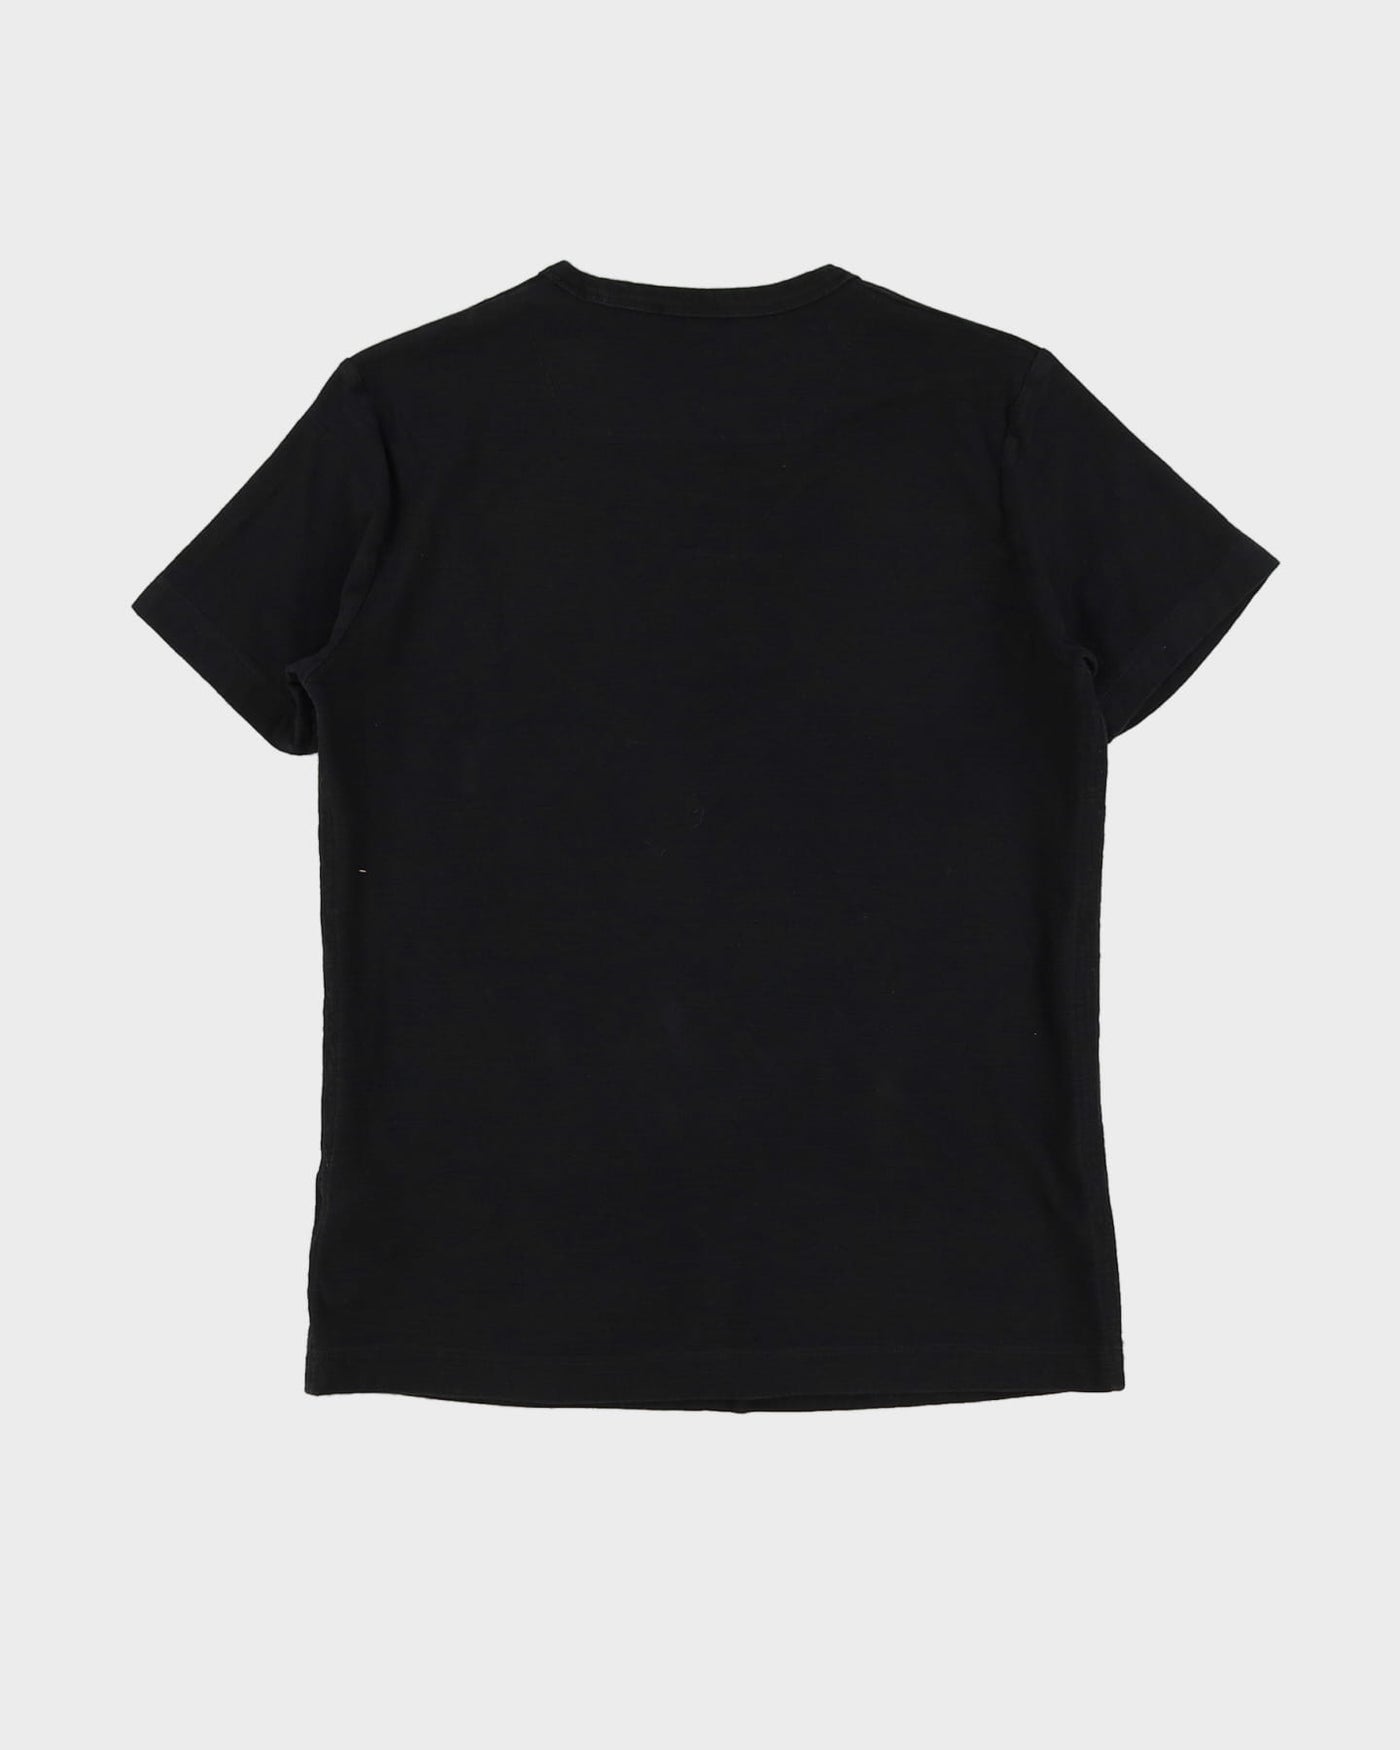 Diesel Black T-Shirt - M